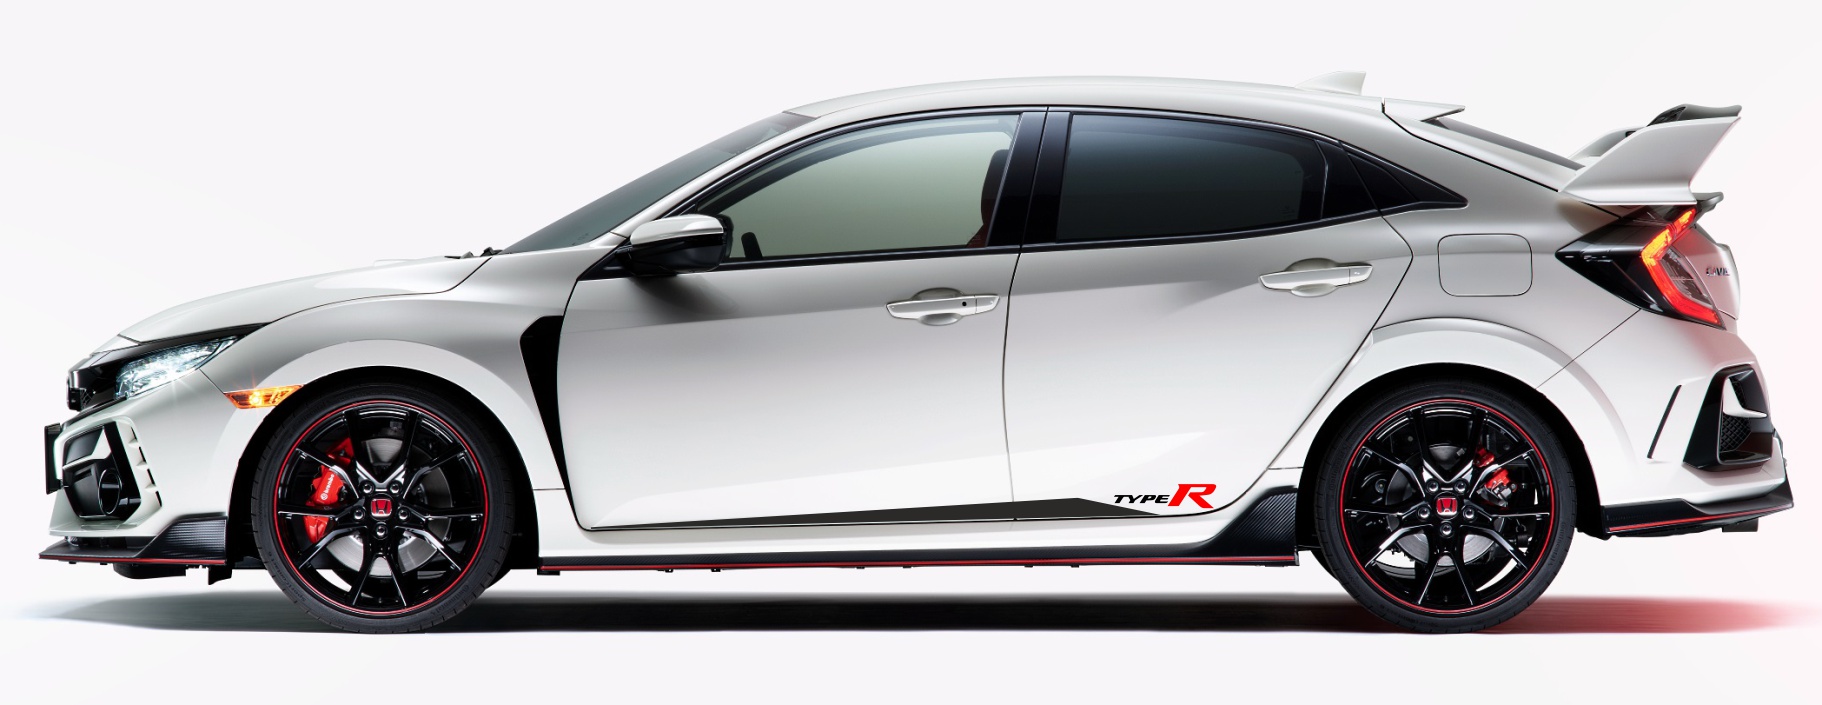 Honda Civic X folie naklejki decals stripes sticker aufkleber nalepky samolepky tuning